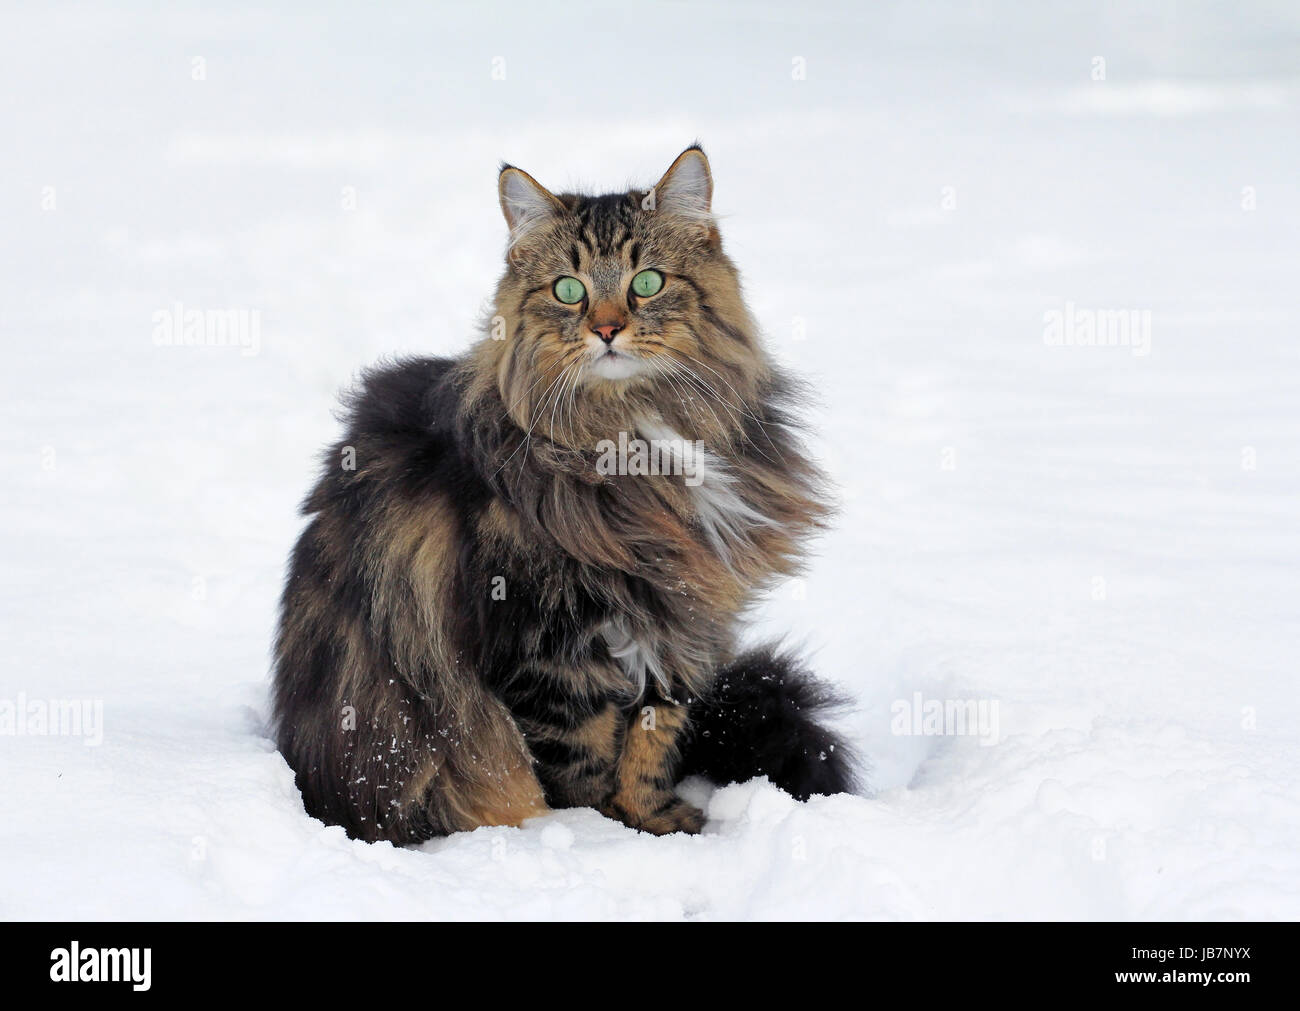 a norwegian cat in snow Stock Photo